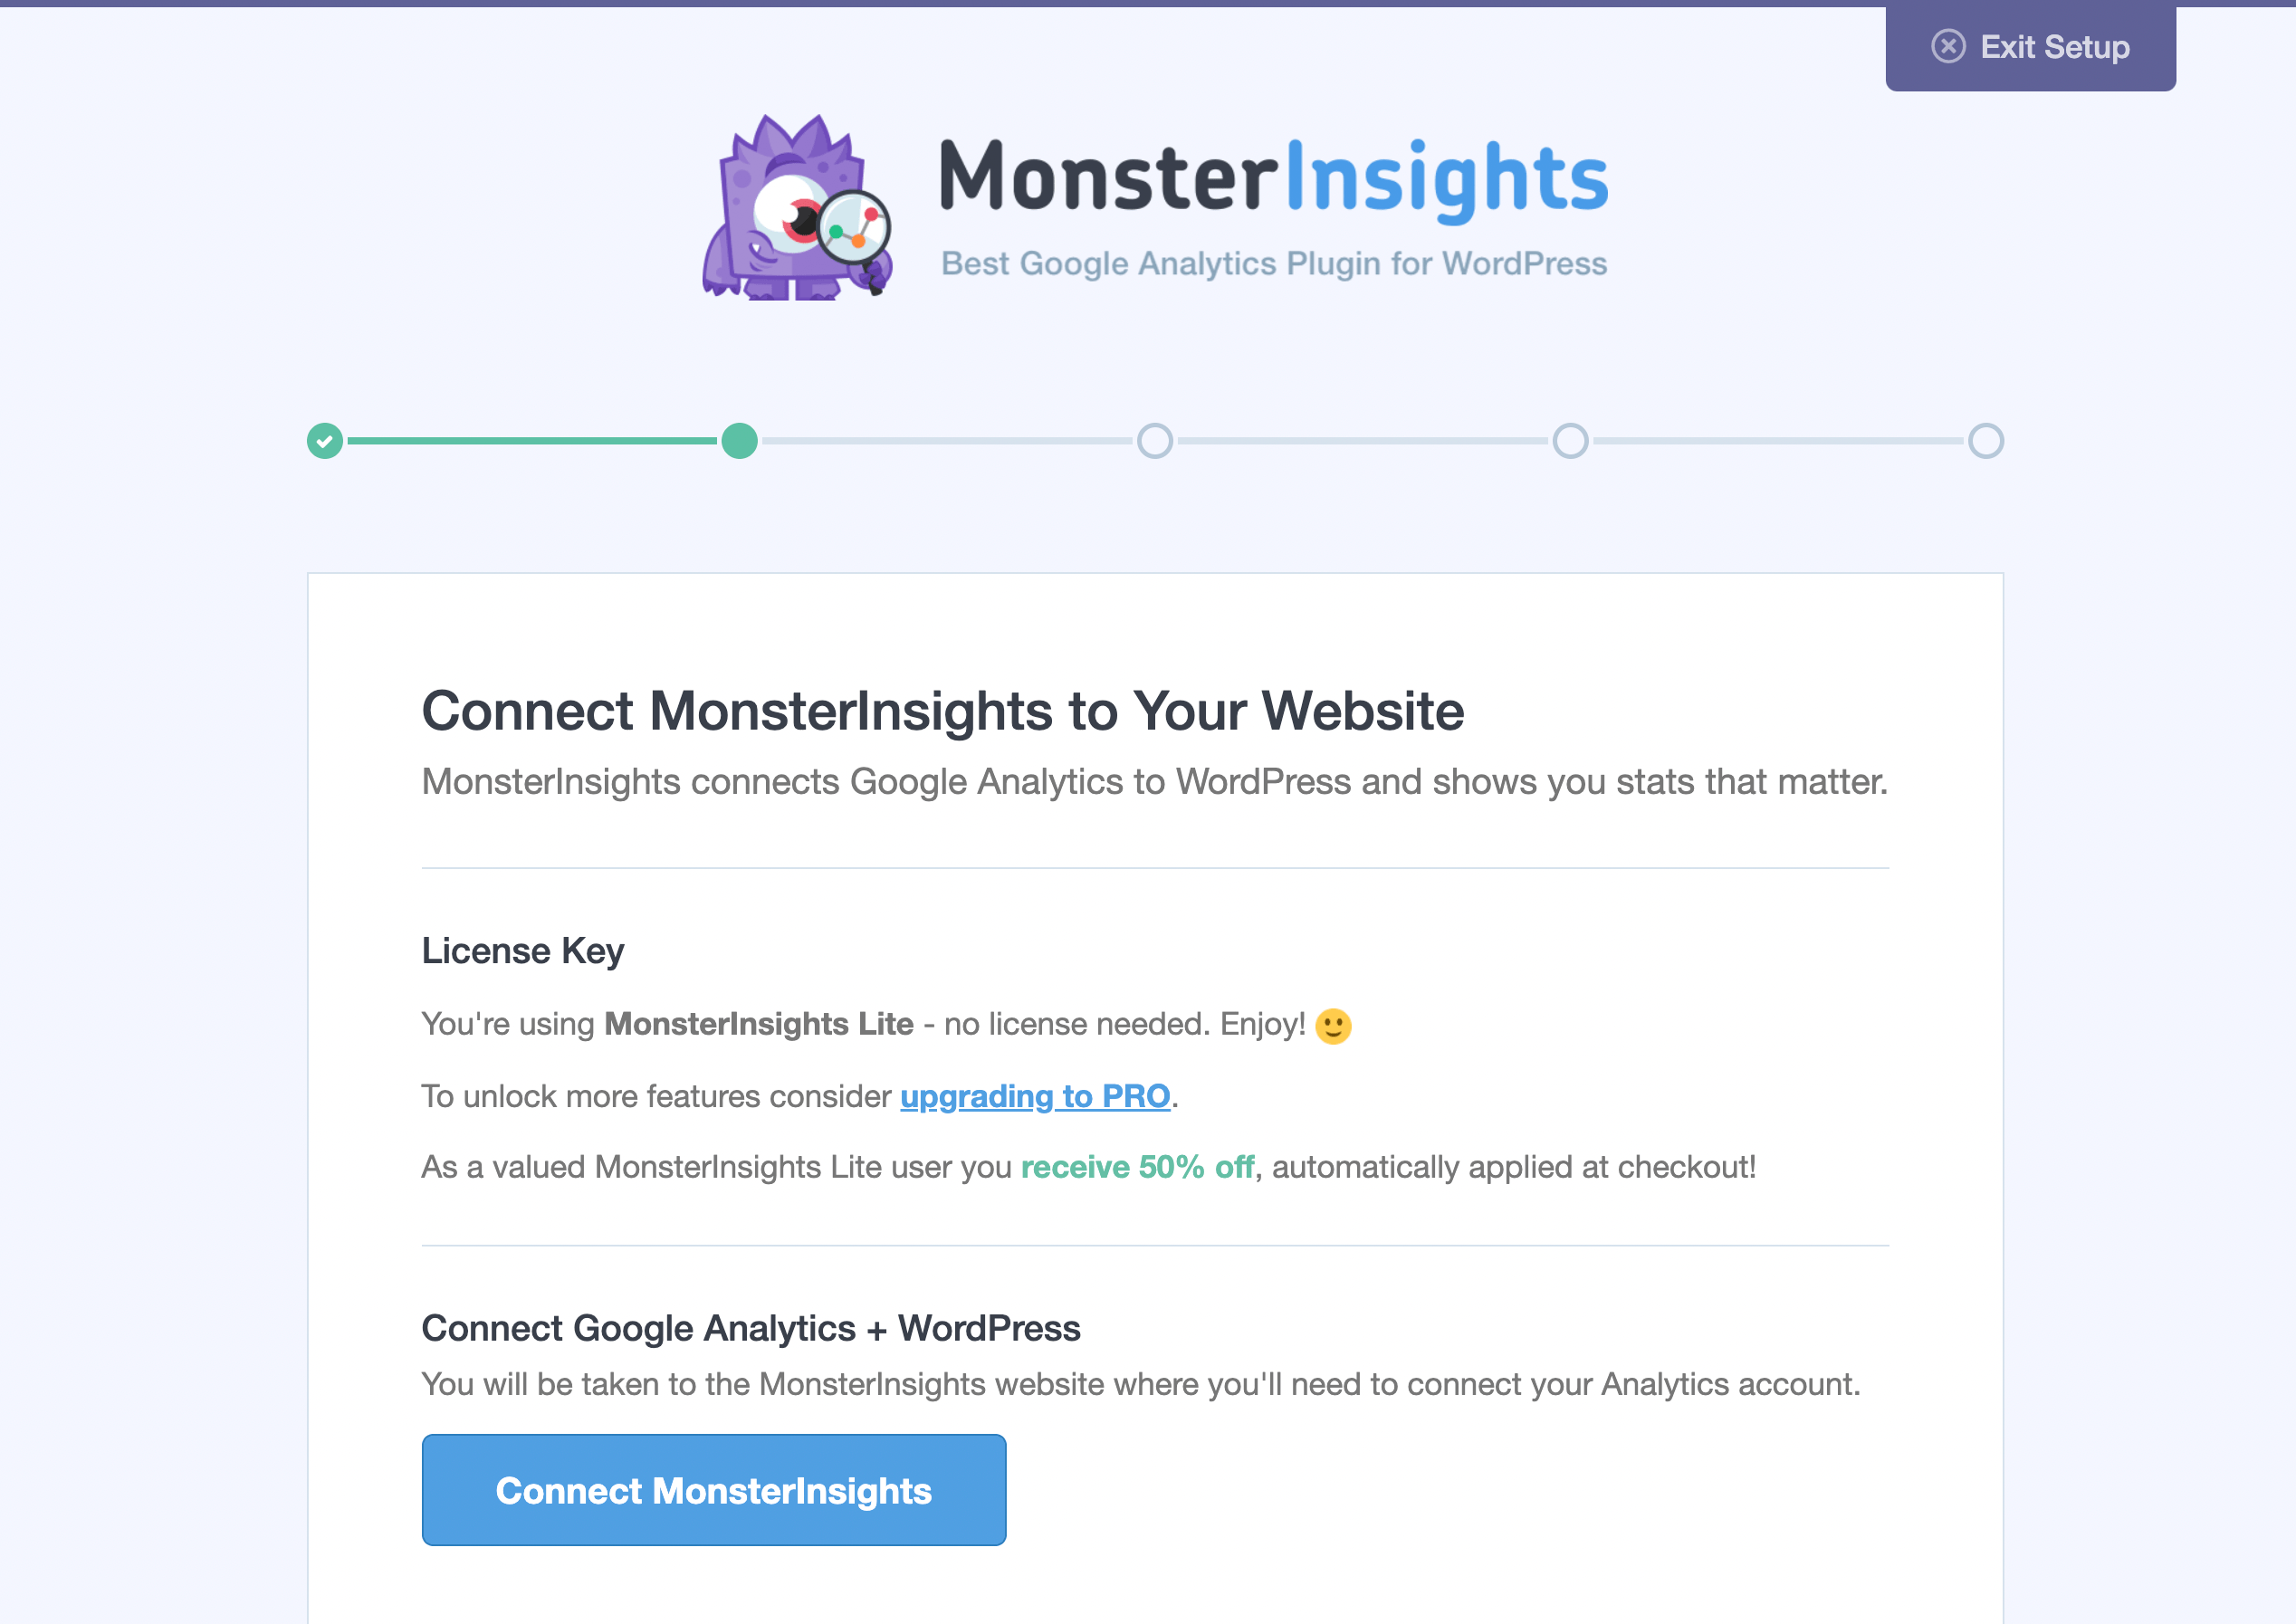 Connect MonsterInsights to Google Analytics + WordPress.